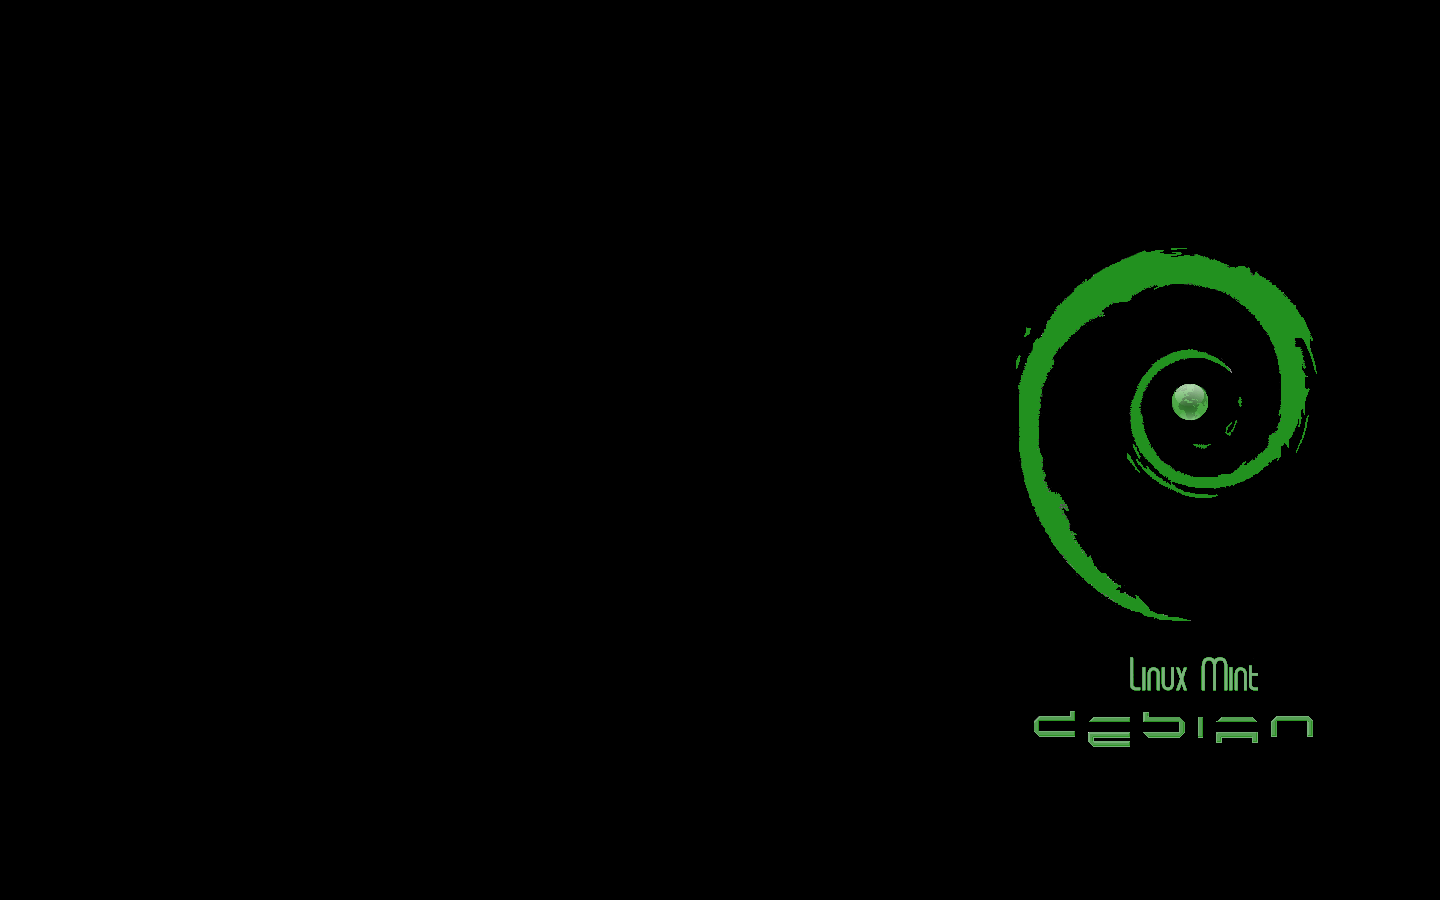 Sombre Linux Mint Debian Wallpaper. Linux Wallpaper